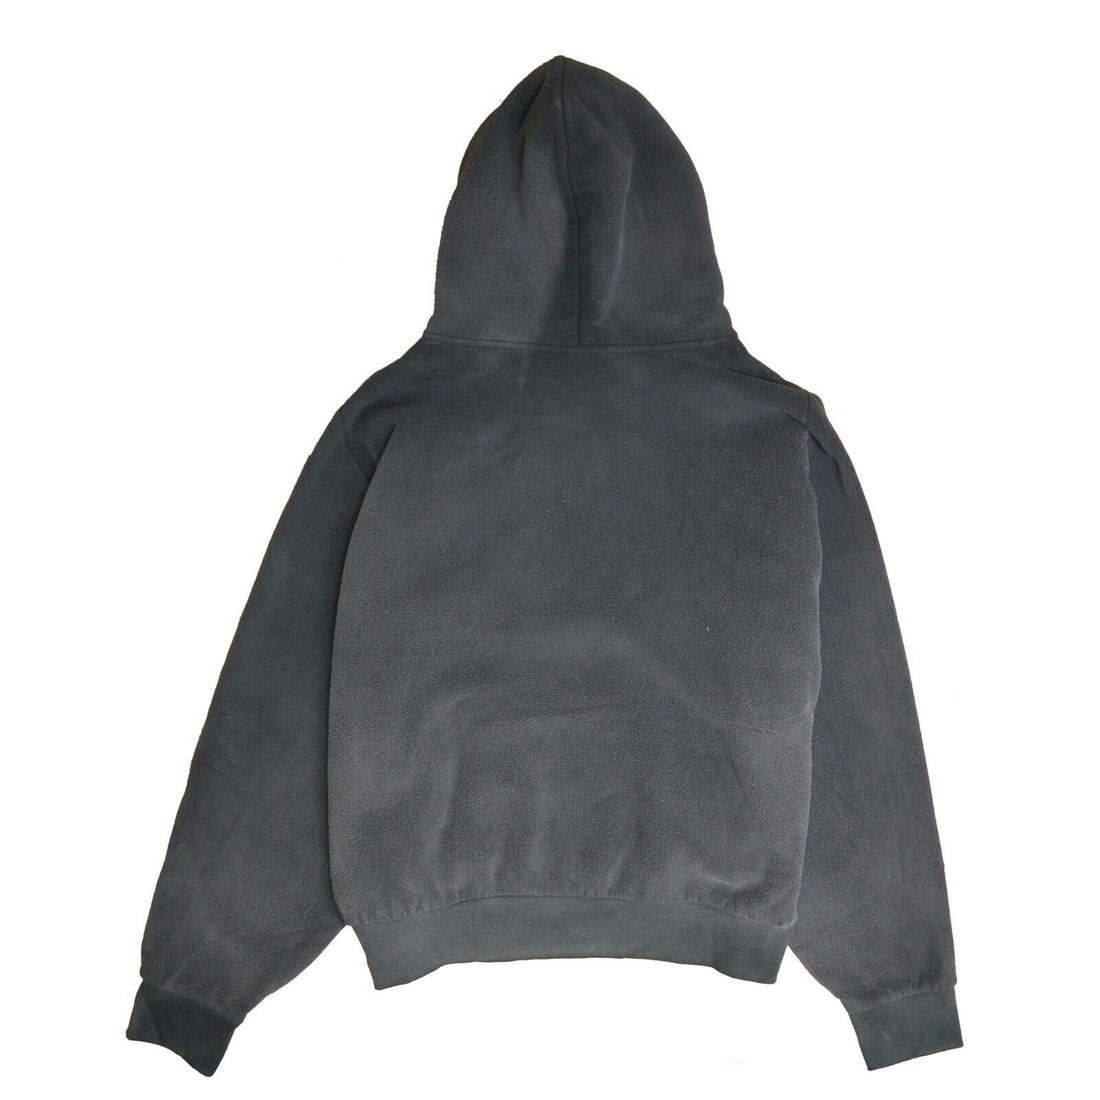 Yeezy Gap Unreleased Polar Fleece Hoodie Size XL Black